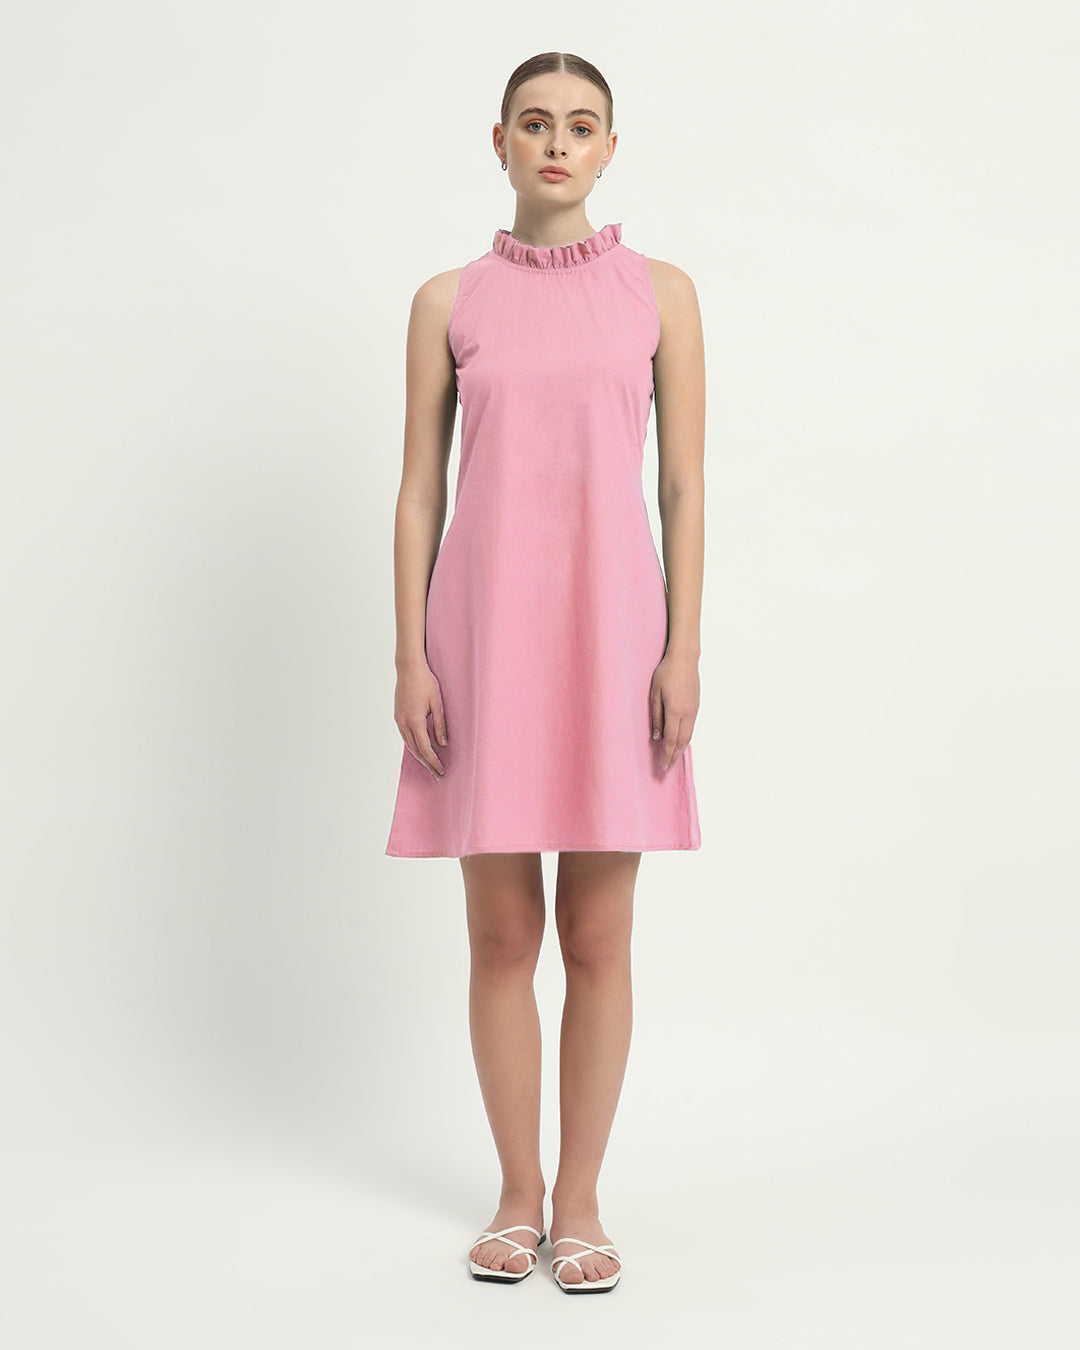 The Angelica Fondant Pink Cotton Dress